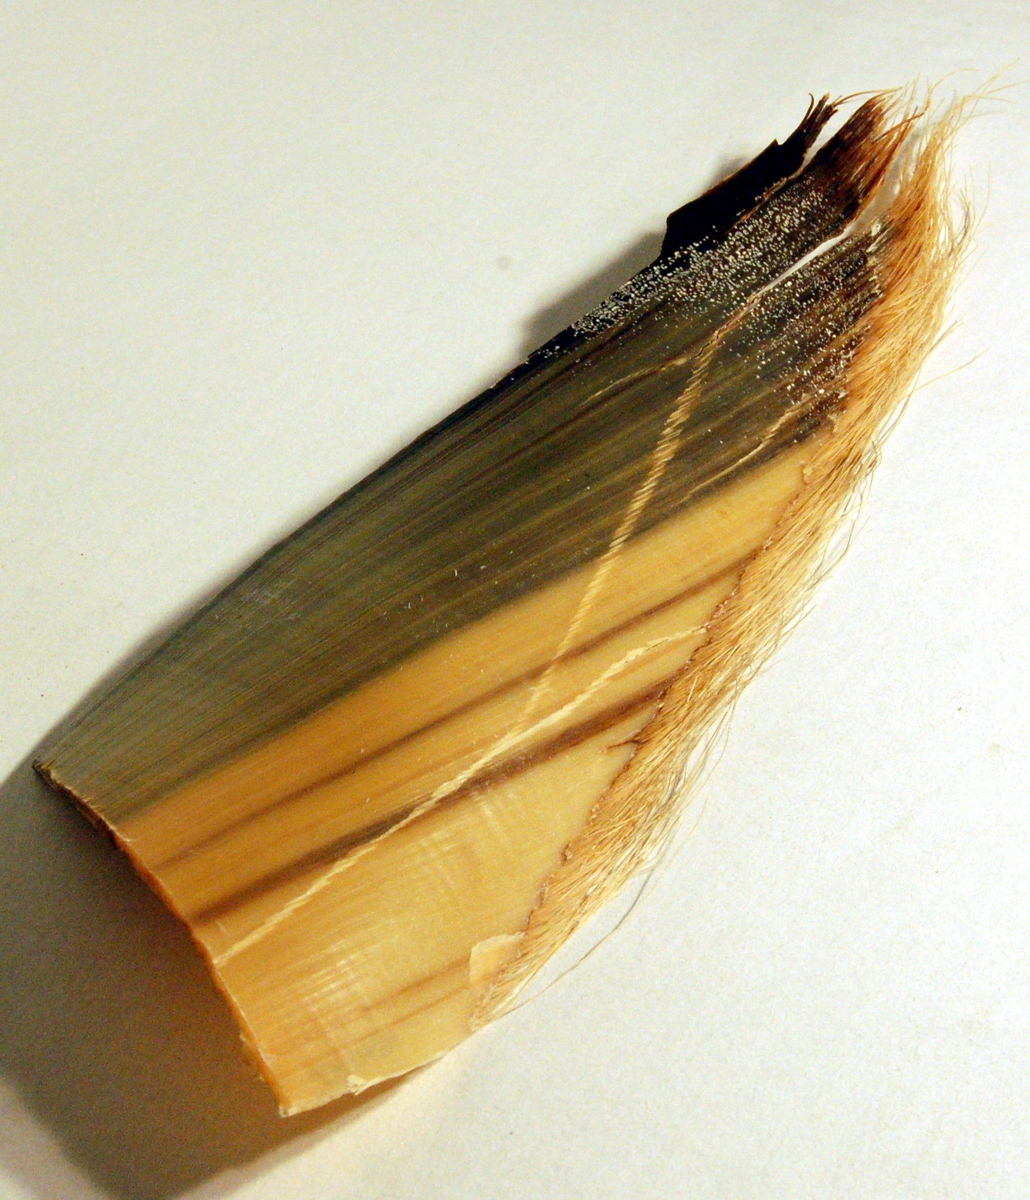 Vifteformet blad av celluloidlignandes materiale med buster